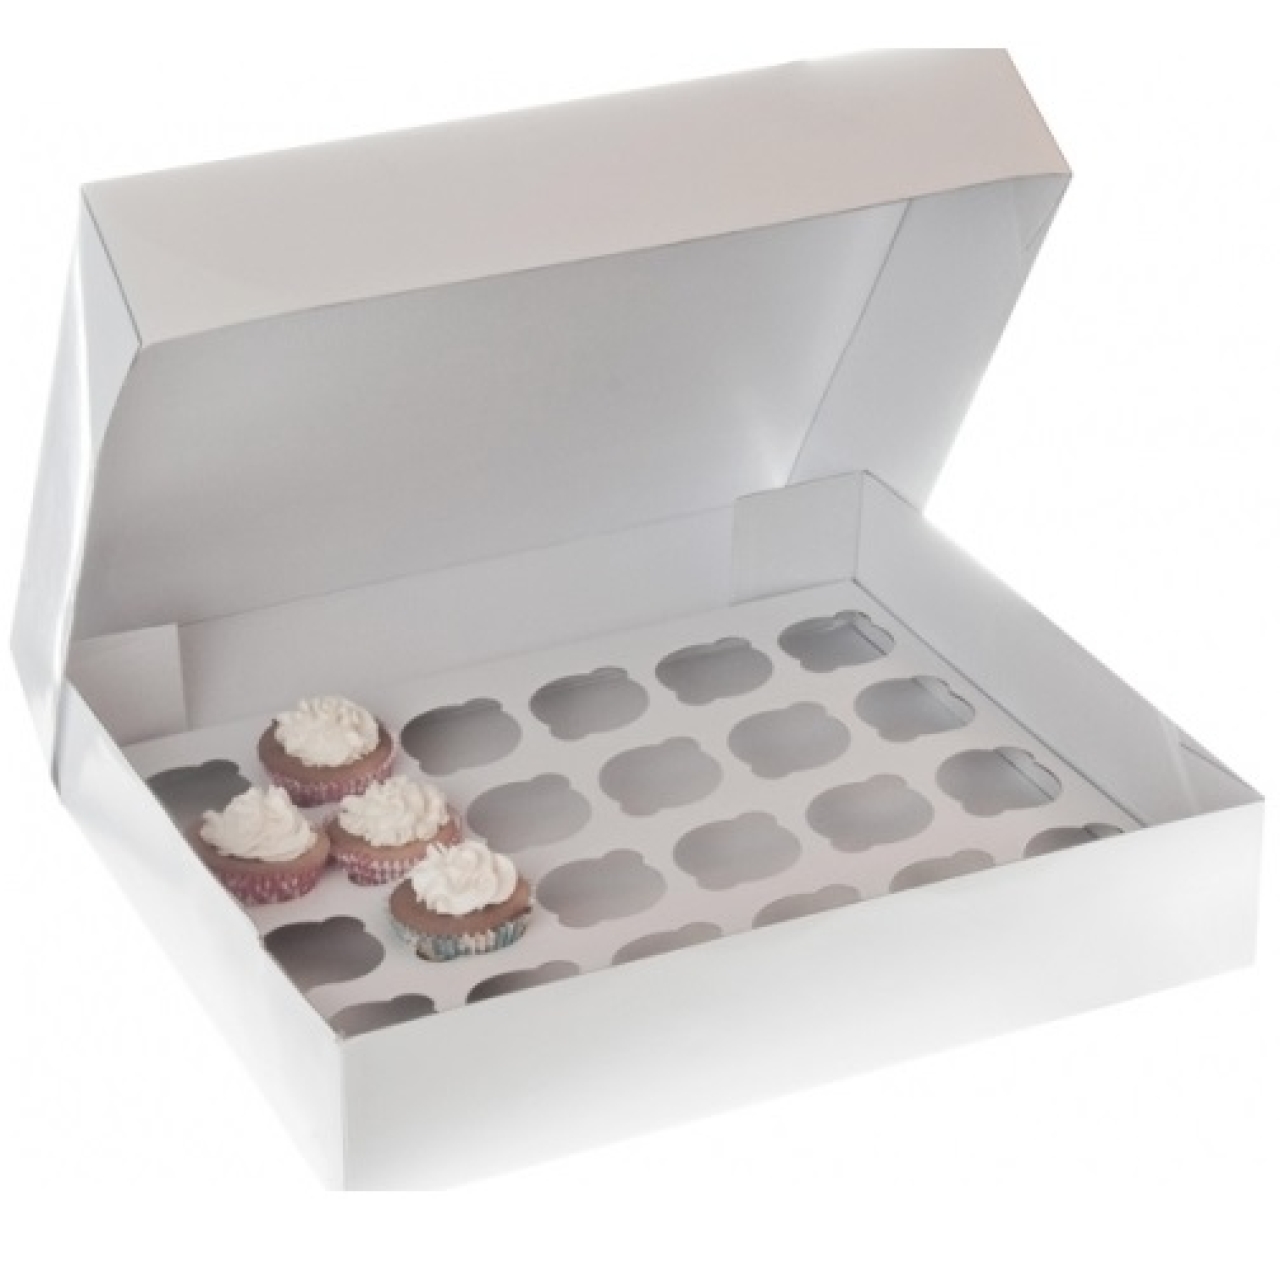 HoM Cupcake Box für 24 Cupcakes, stabil, weiß | MEINCUPCAKE Shop